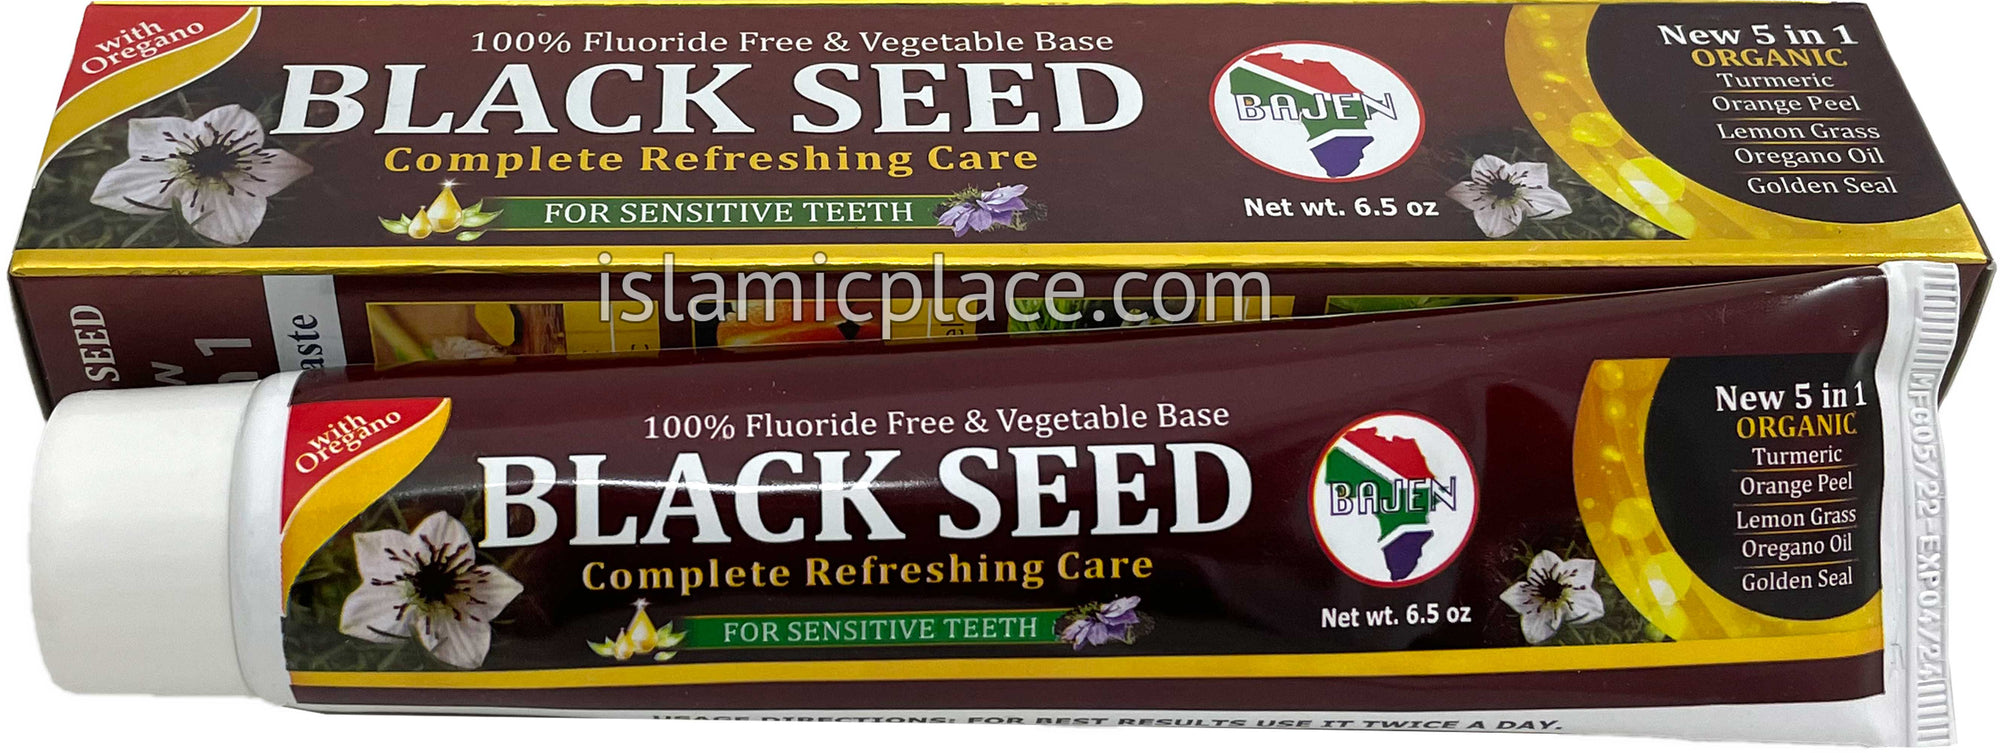 Black Seed Toothpaste - 5 in 1 (Turmeric, Orange Peel, Lemon Grass, Oregano Oil, Golden Seal) 6.5 oz - Halal & Organic